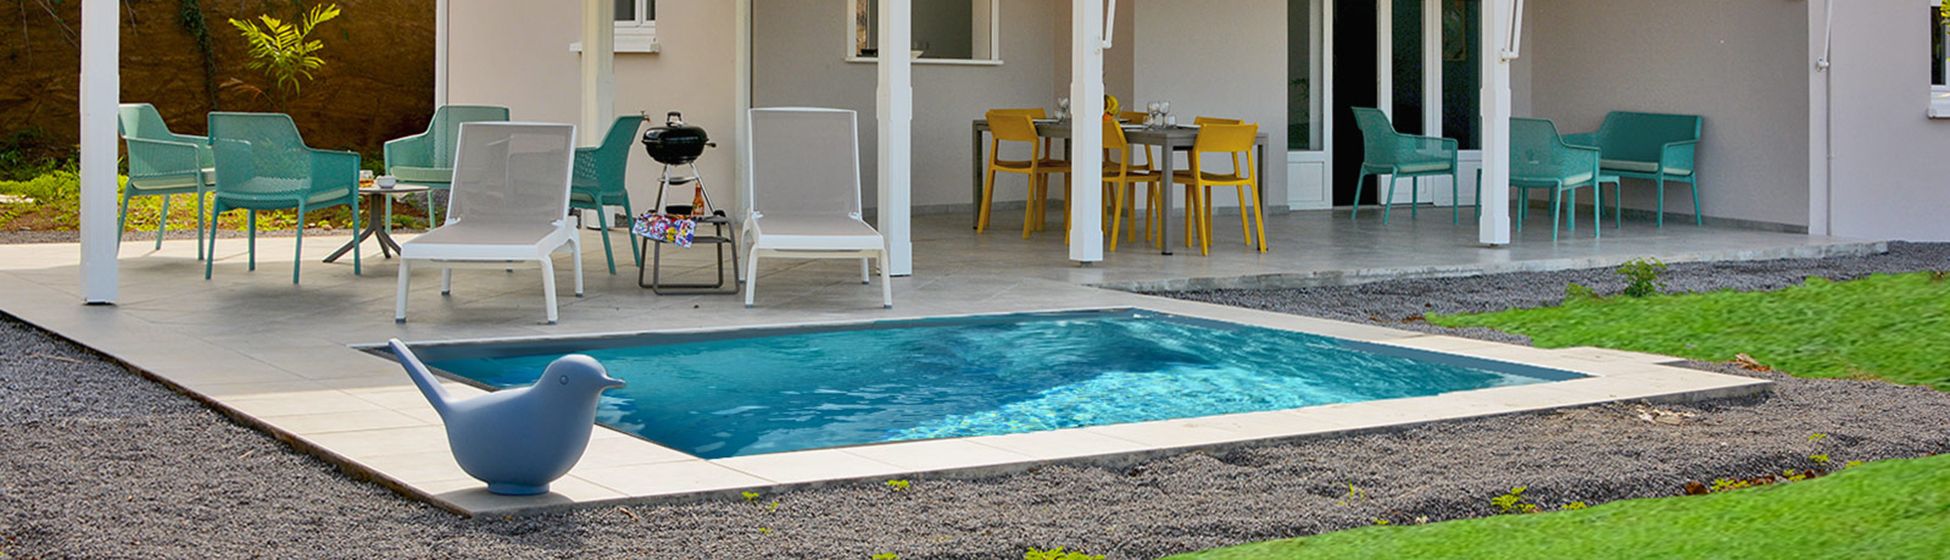 Location villa avec piscine martinique particulier